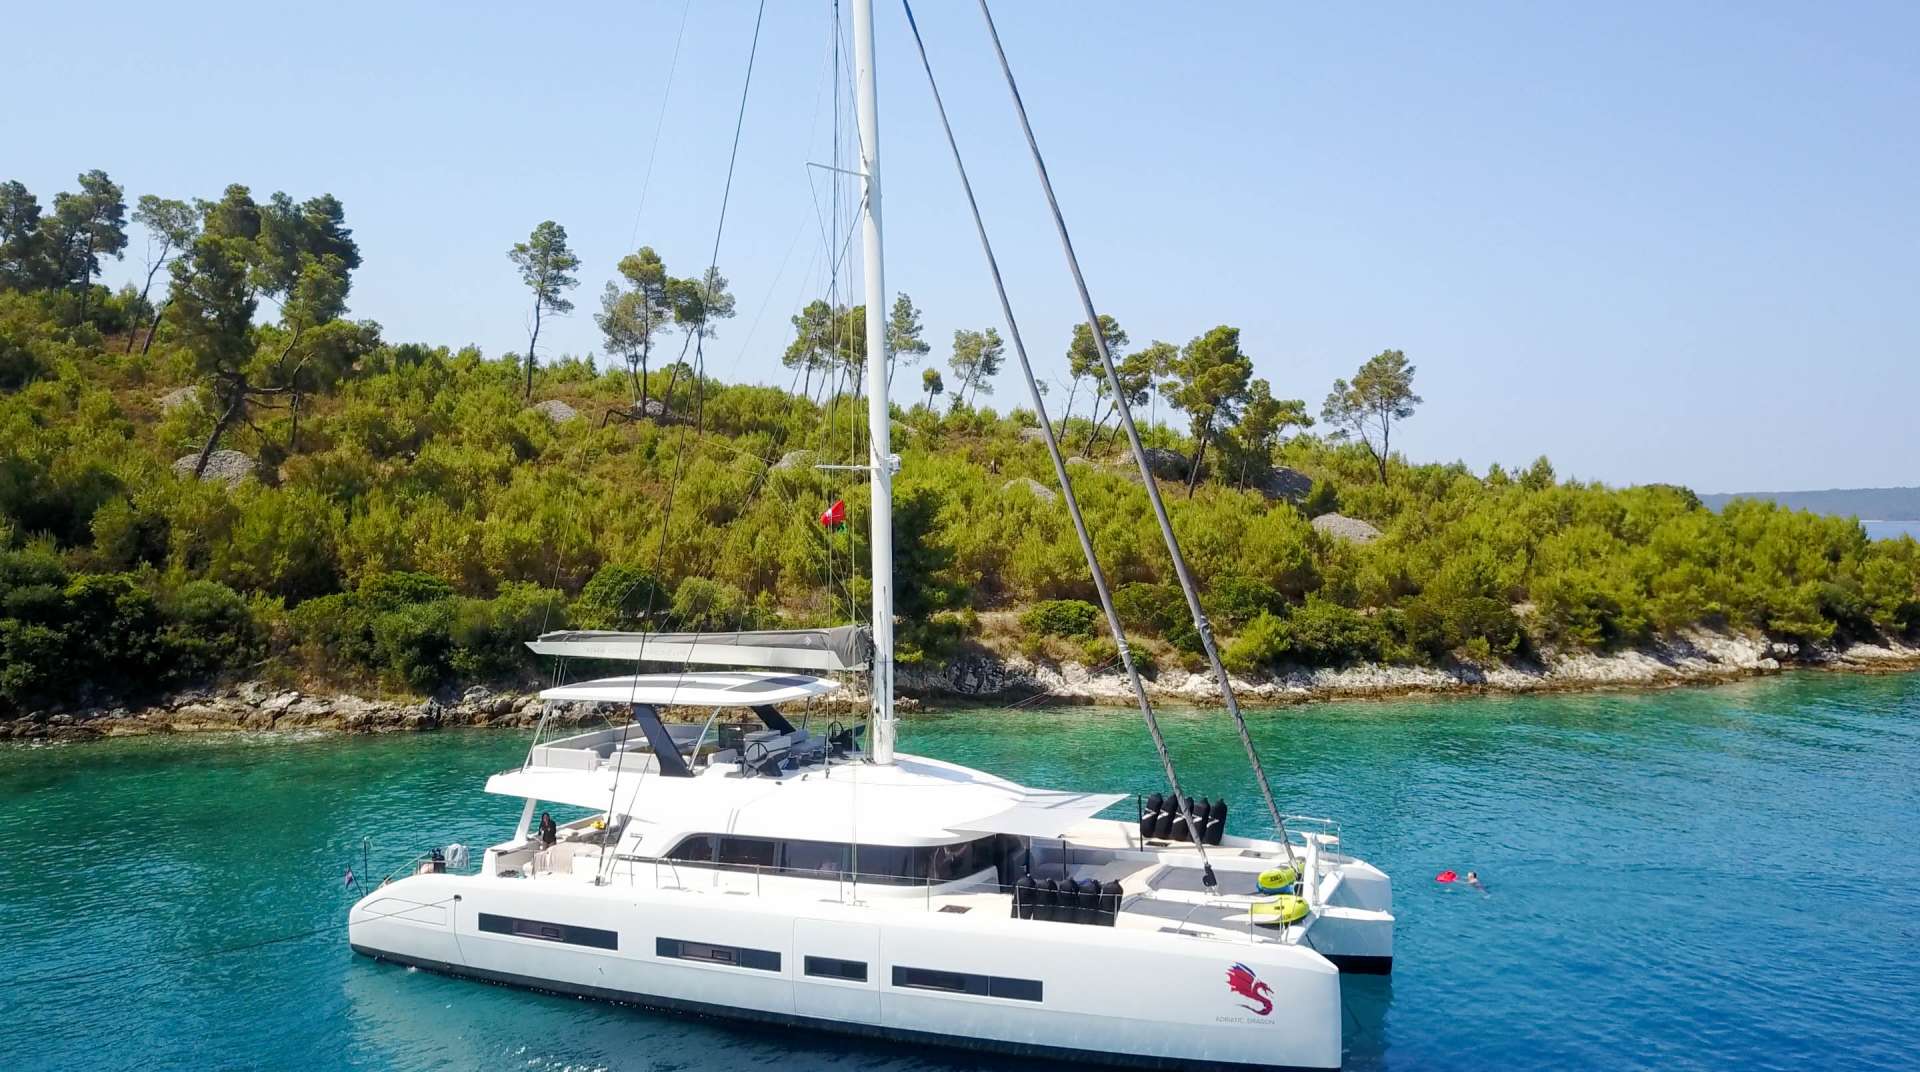 adriatic dragon (lagoon 77) - Yacht Charter Solta & Boat hire in Croatia 1